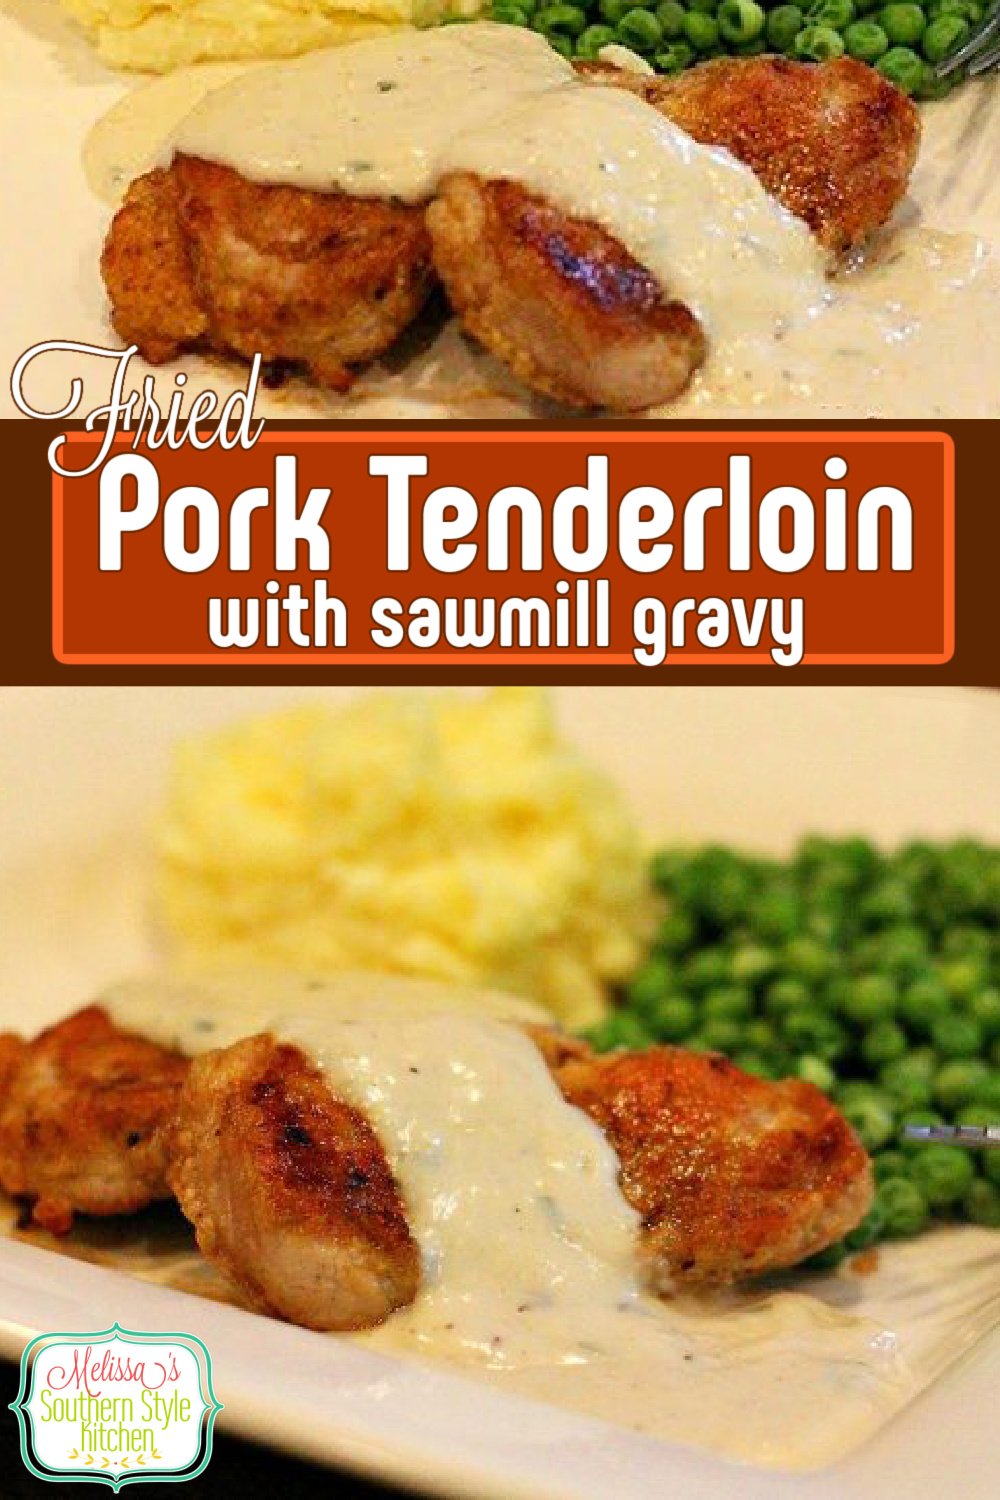 Make this Fried Pork Tenderloin with Sawmill Gravy for a comforting meal. #porktenderloin #pork #dinnerdieas #southernrecipes #southernfood #food #recipes #porkrecipes #bestporkrecipes #sawmillgravyhrecipe #gravyrecipe via @melissasssk